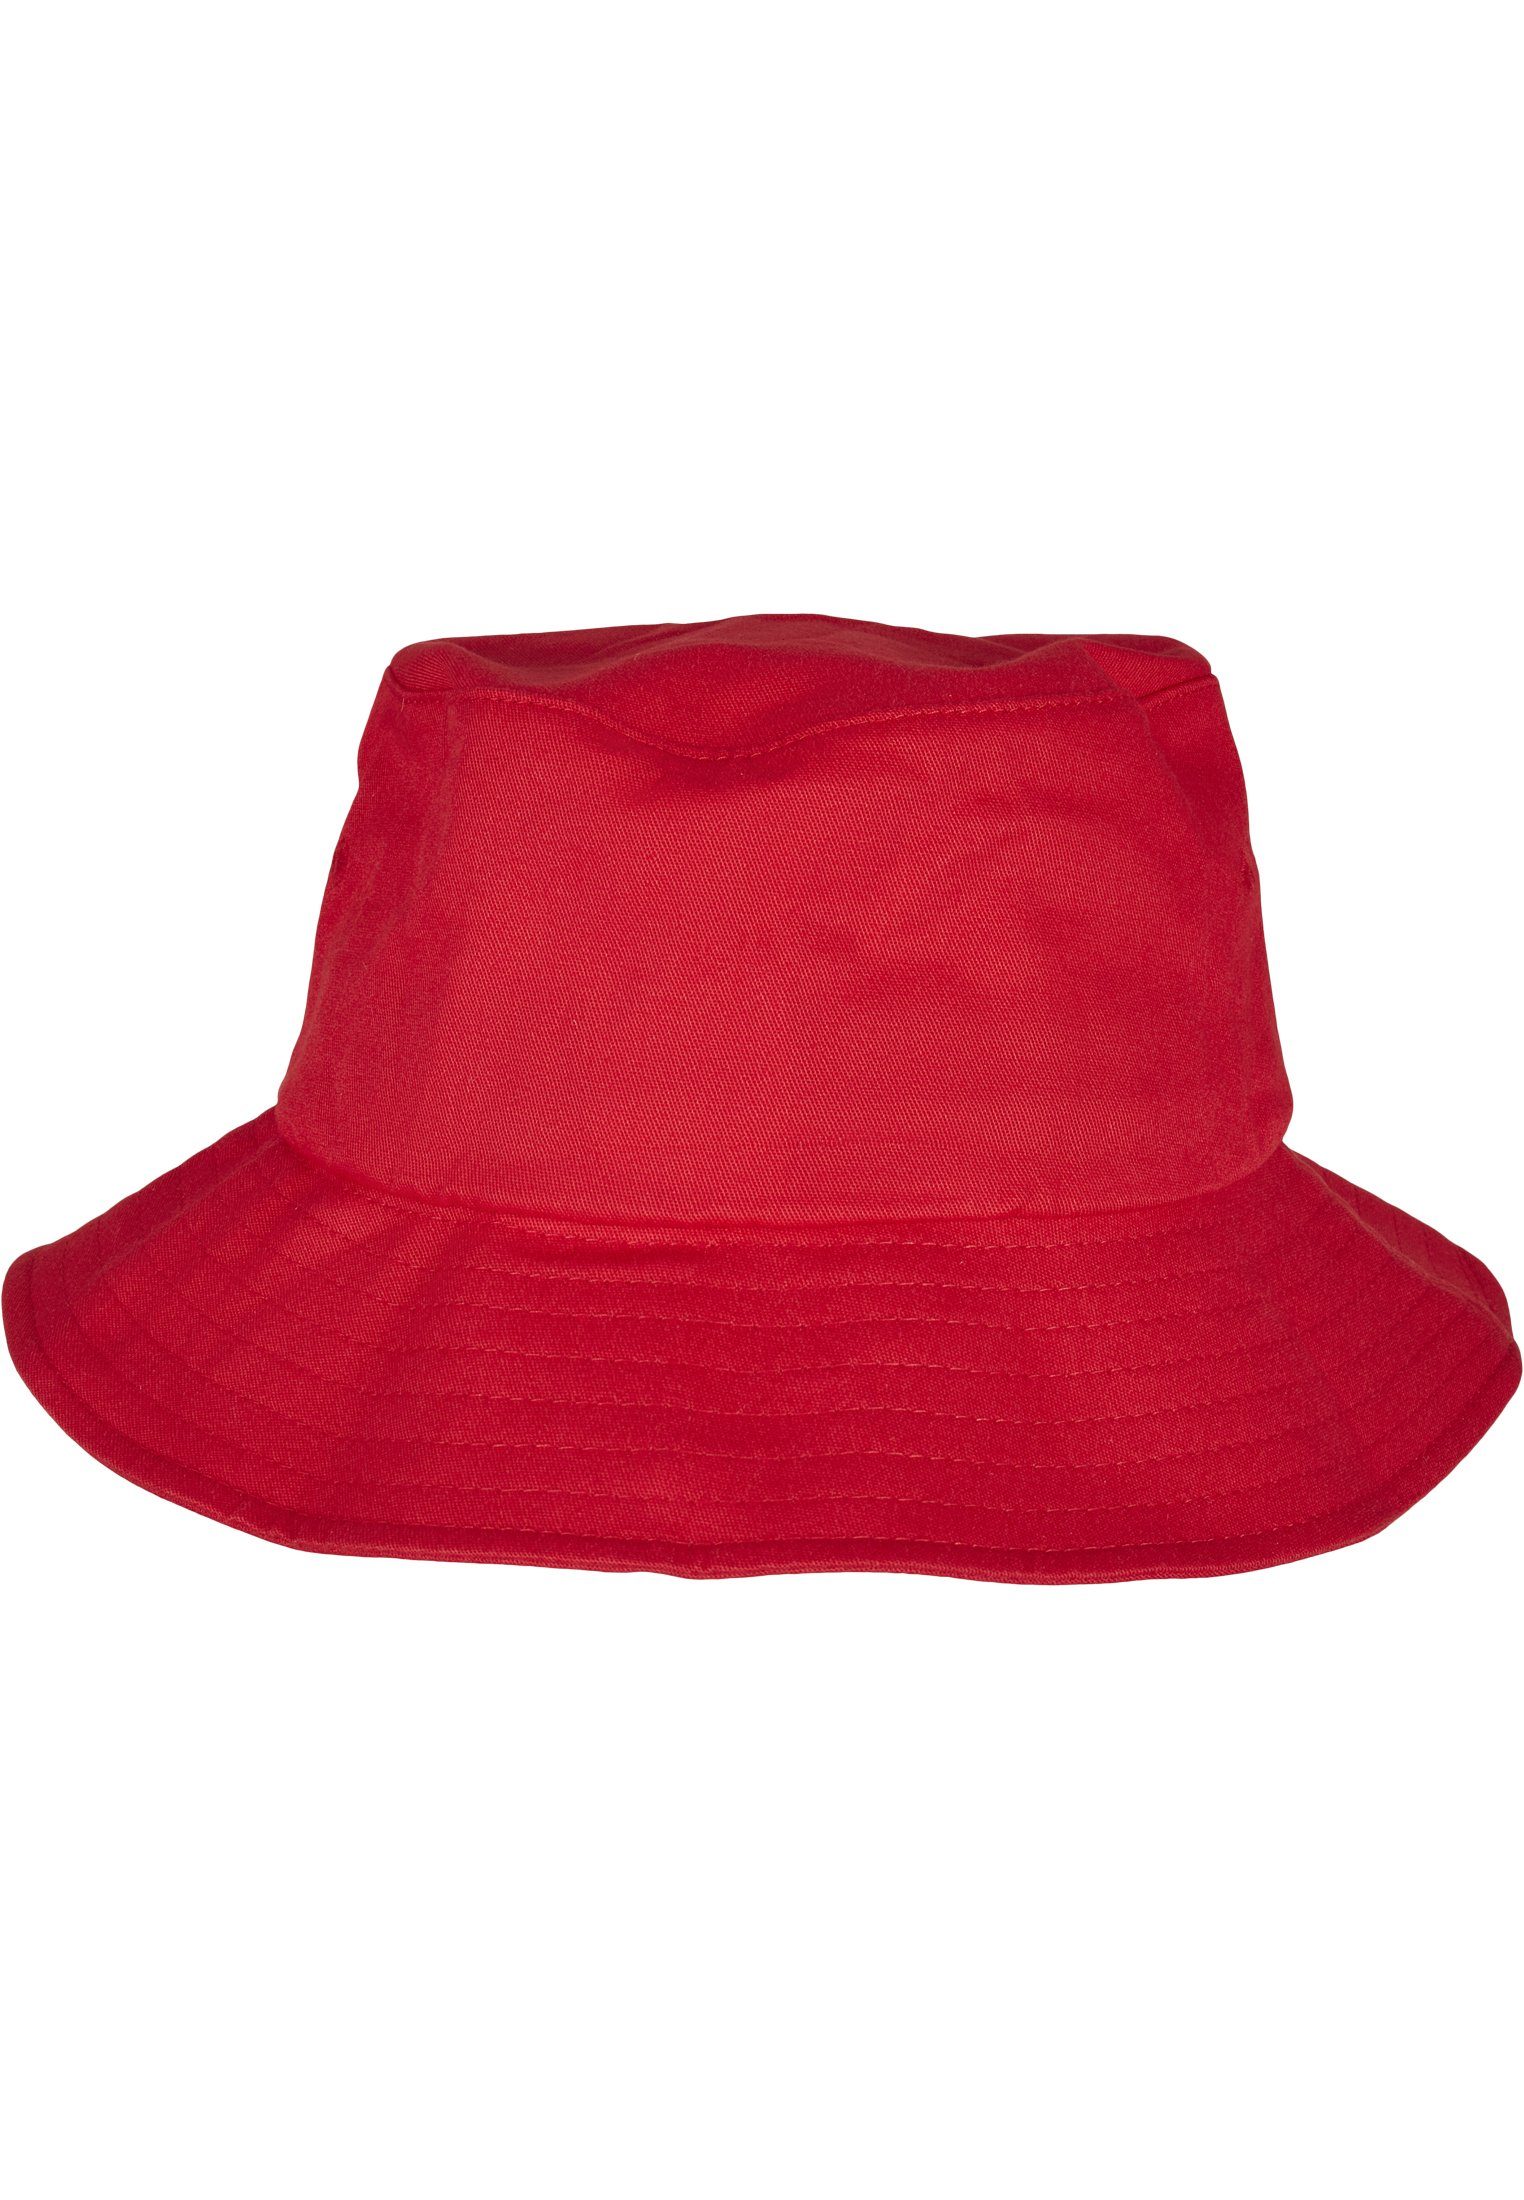 MisterTee Snapback Cap Accessoires Hat Bucket Bad Boy